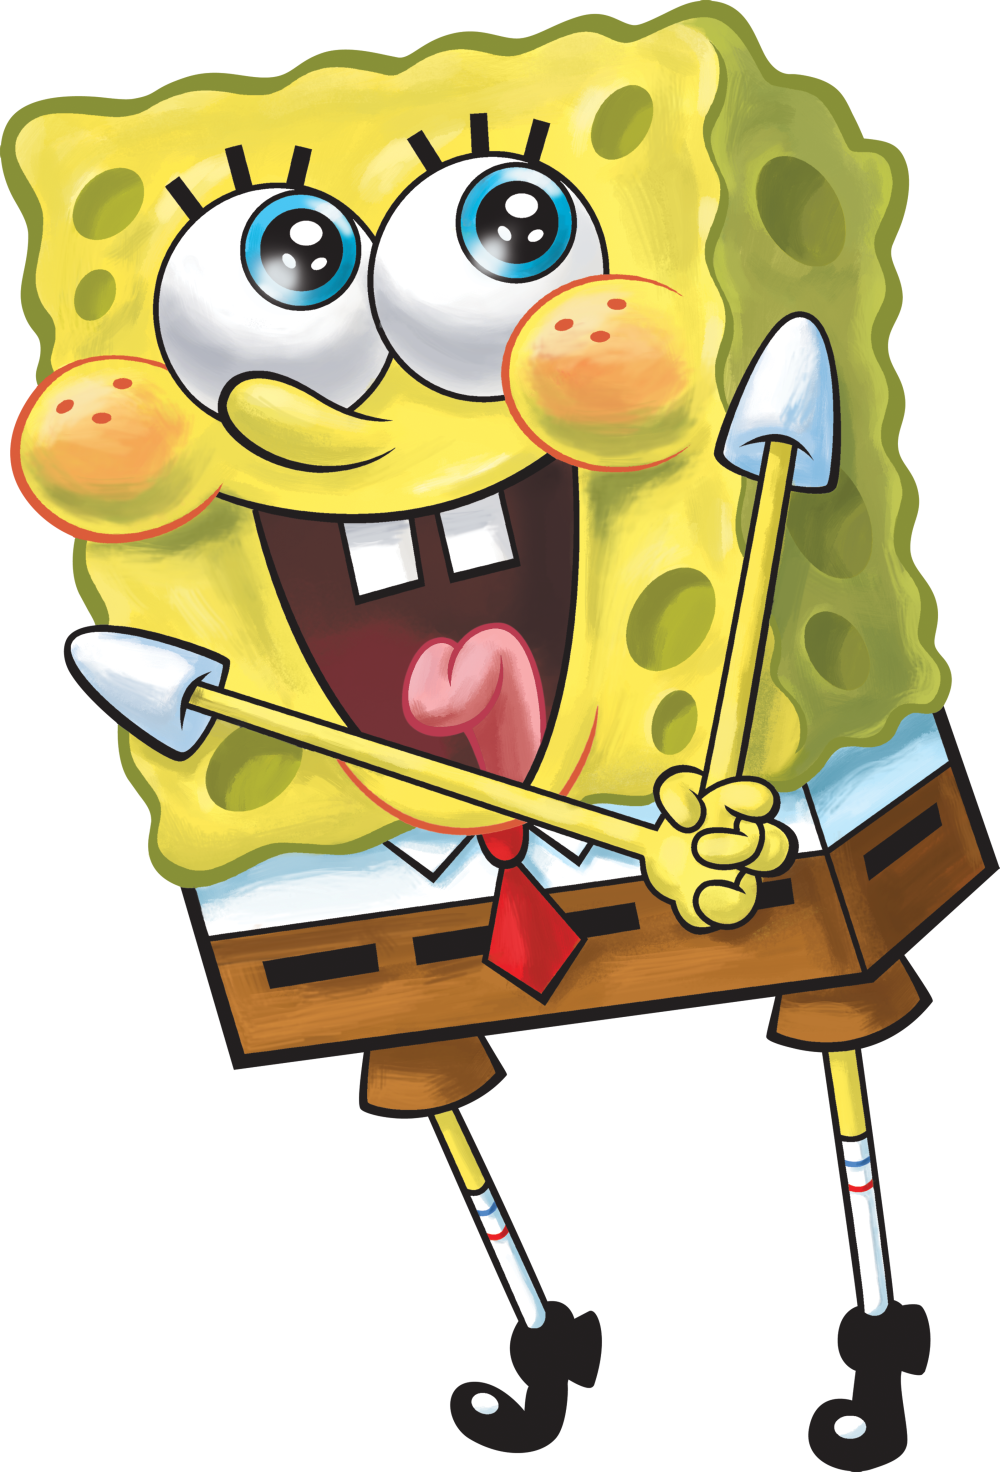 Image SpongeBob SquarePants Smiling Artworkpng Encyclopedia